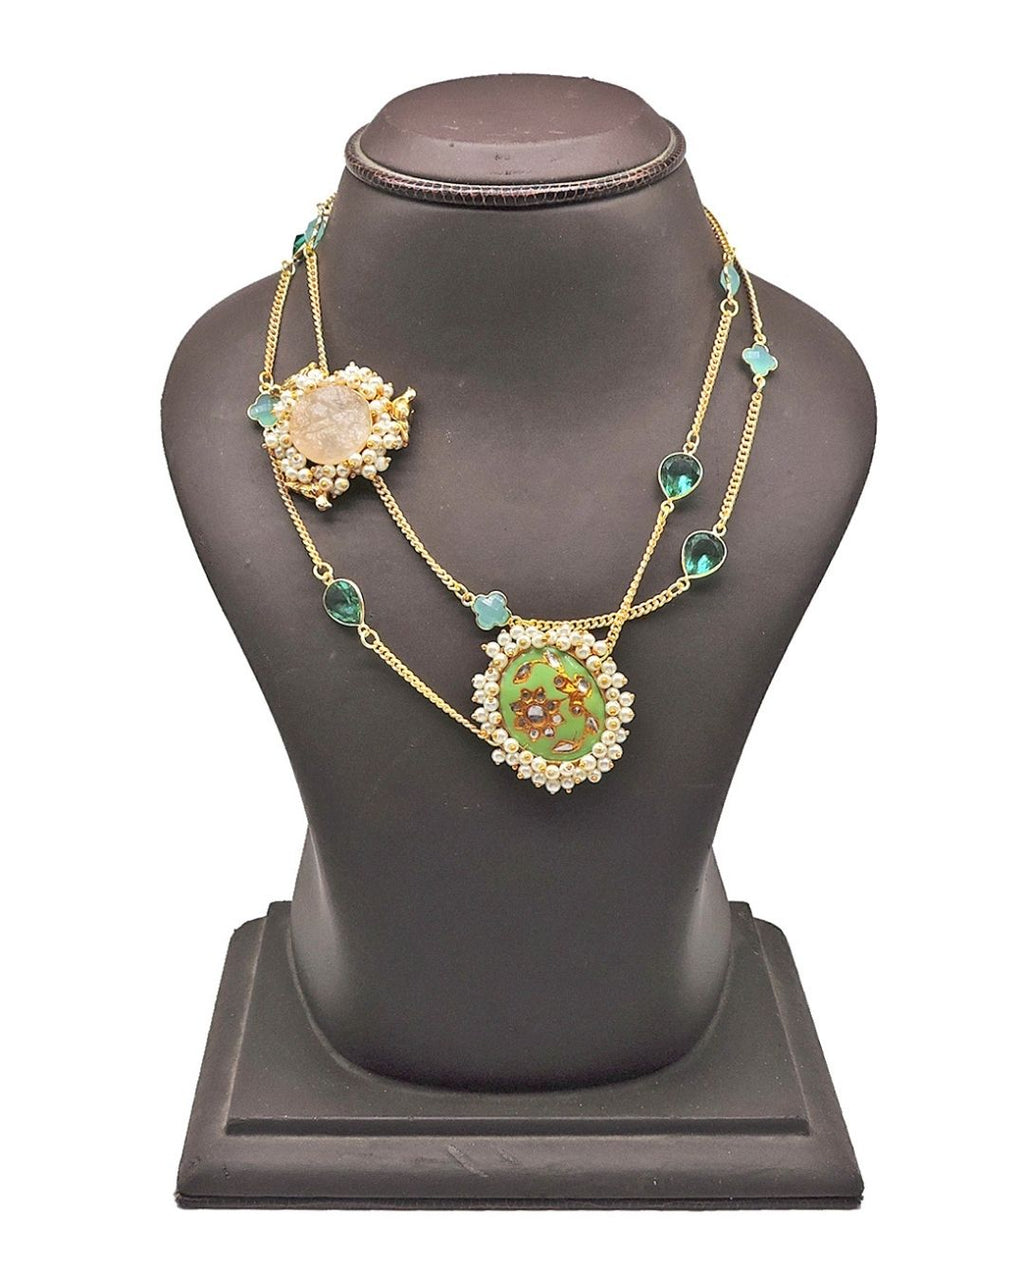 Kundan Breeze Necklace - Necklaces - Handcrafted Jewellery - Made in India - Dubai Jewellery, Fashion & Lifestyle - Dori